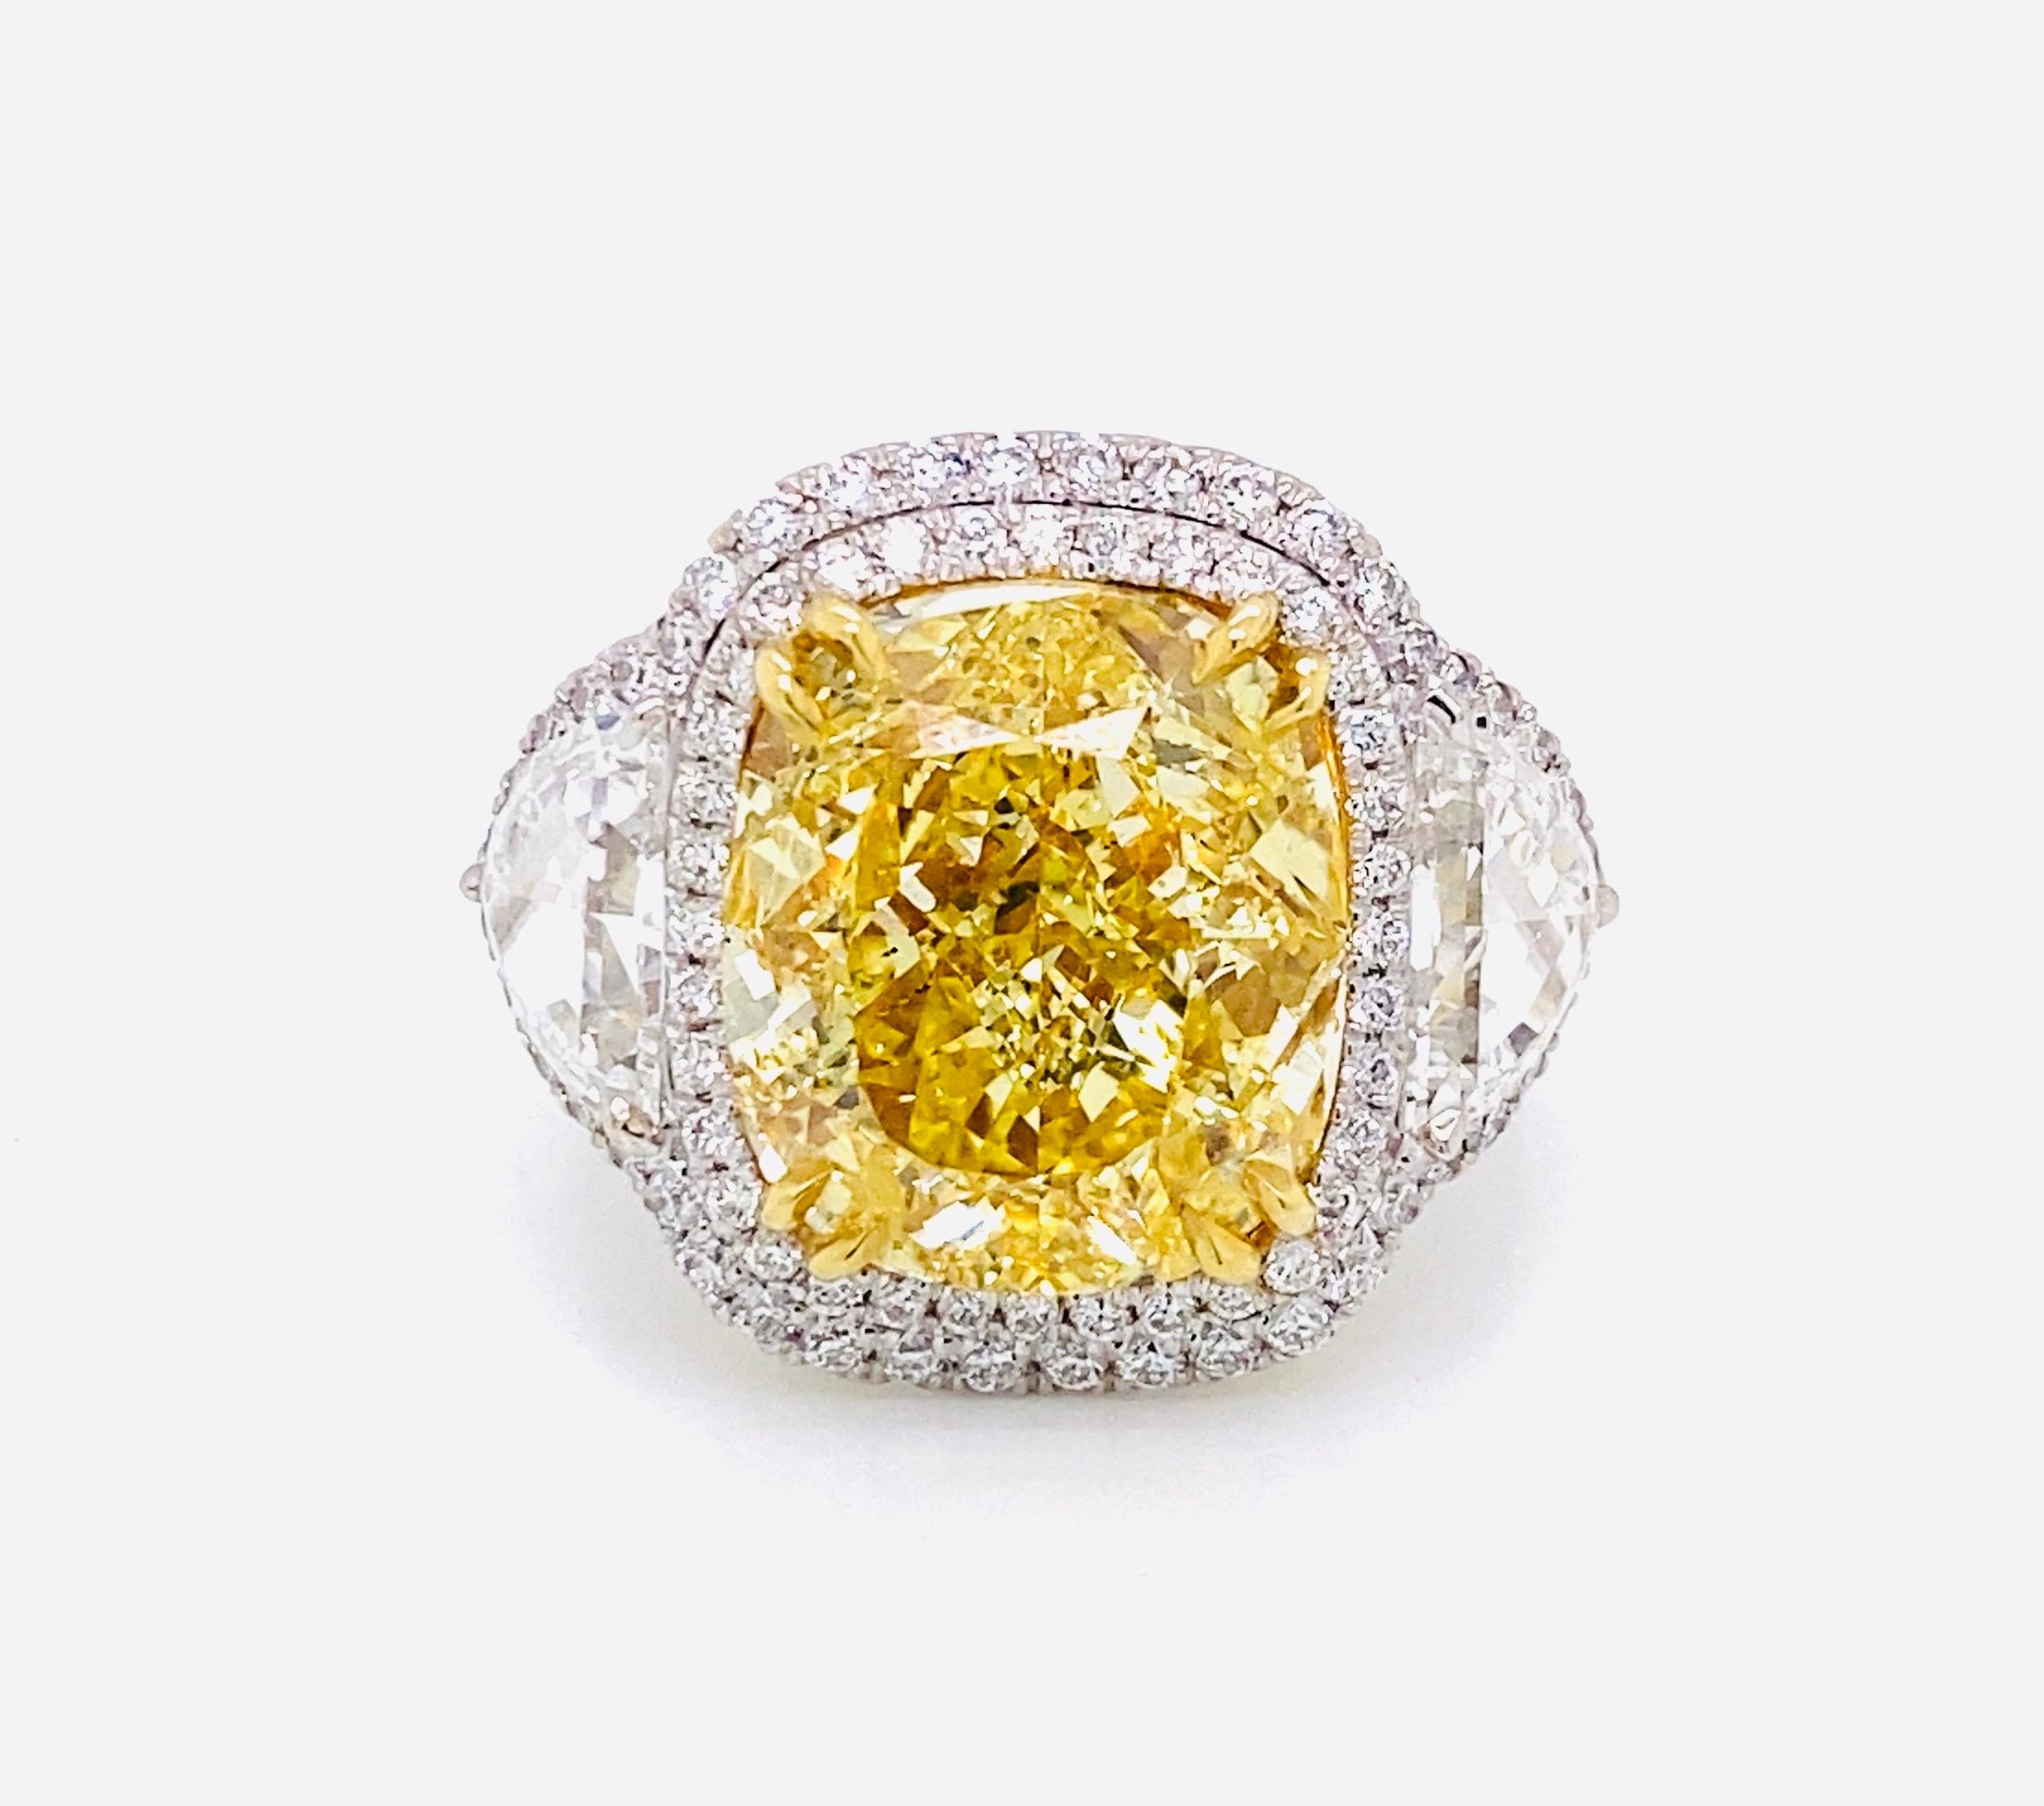 Emilio Jewelry GIA Certified 12.67 Carat Fancy Intense Yellow Diamond Ring For Sale 2